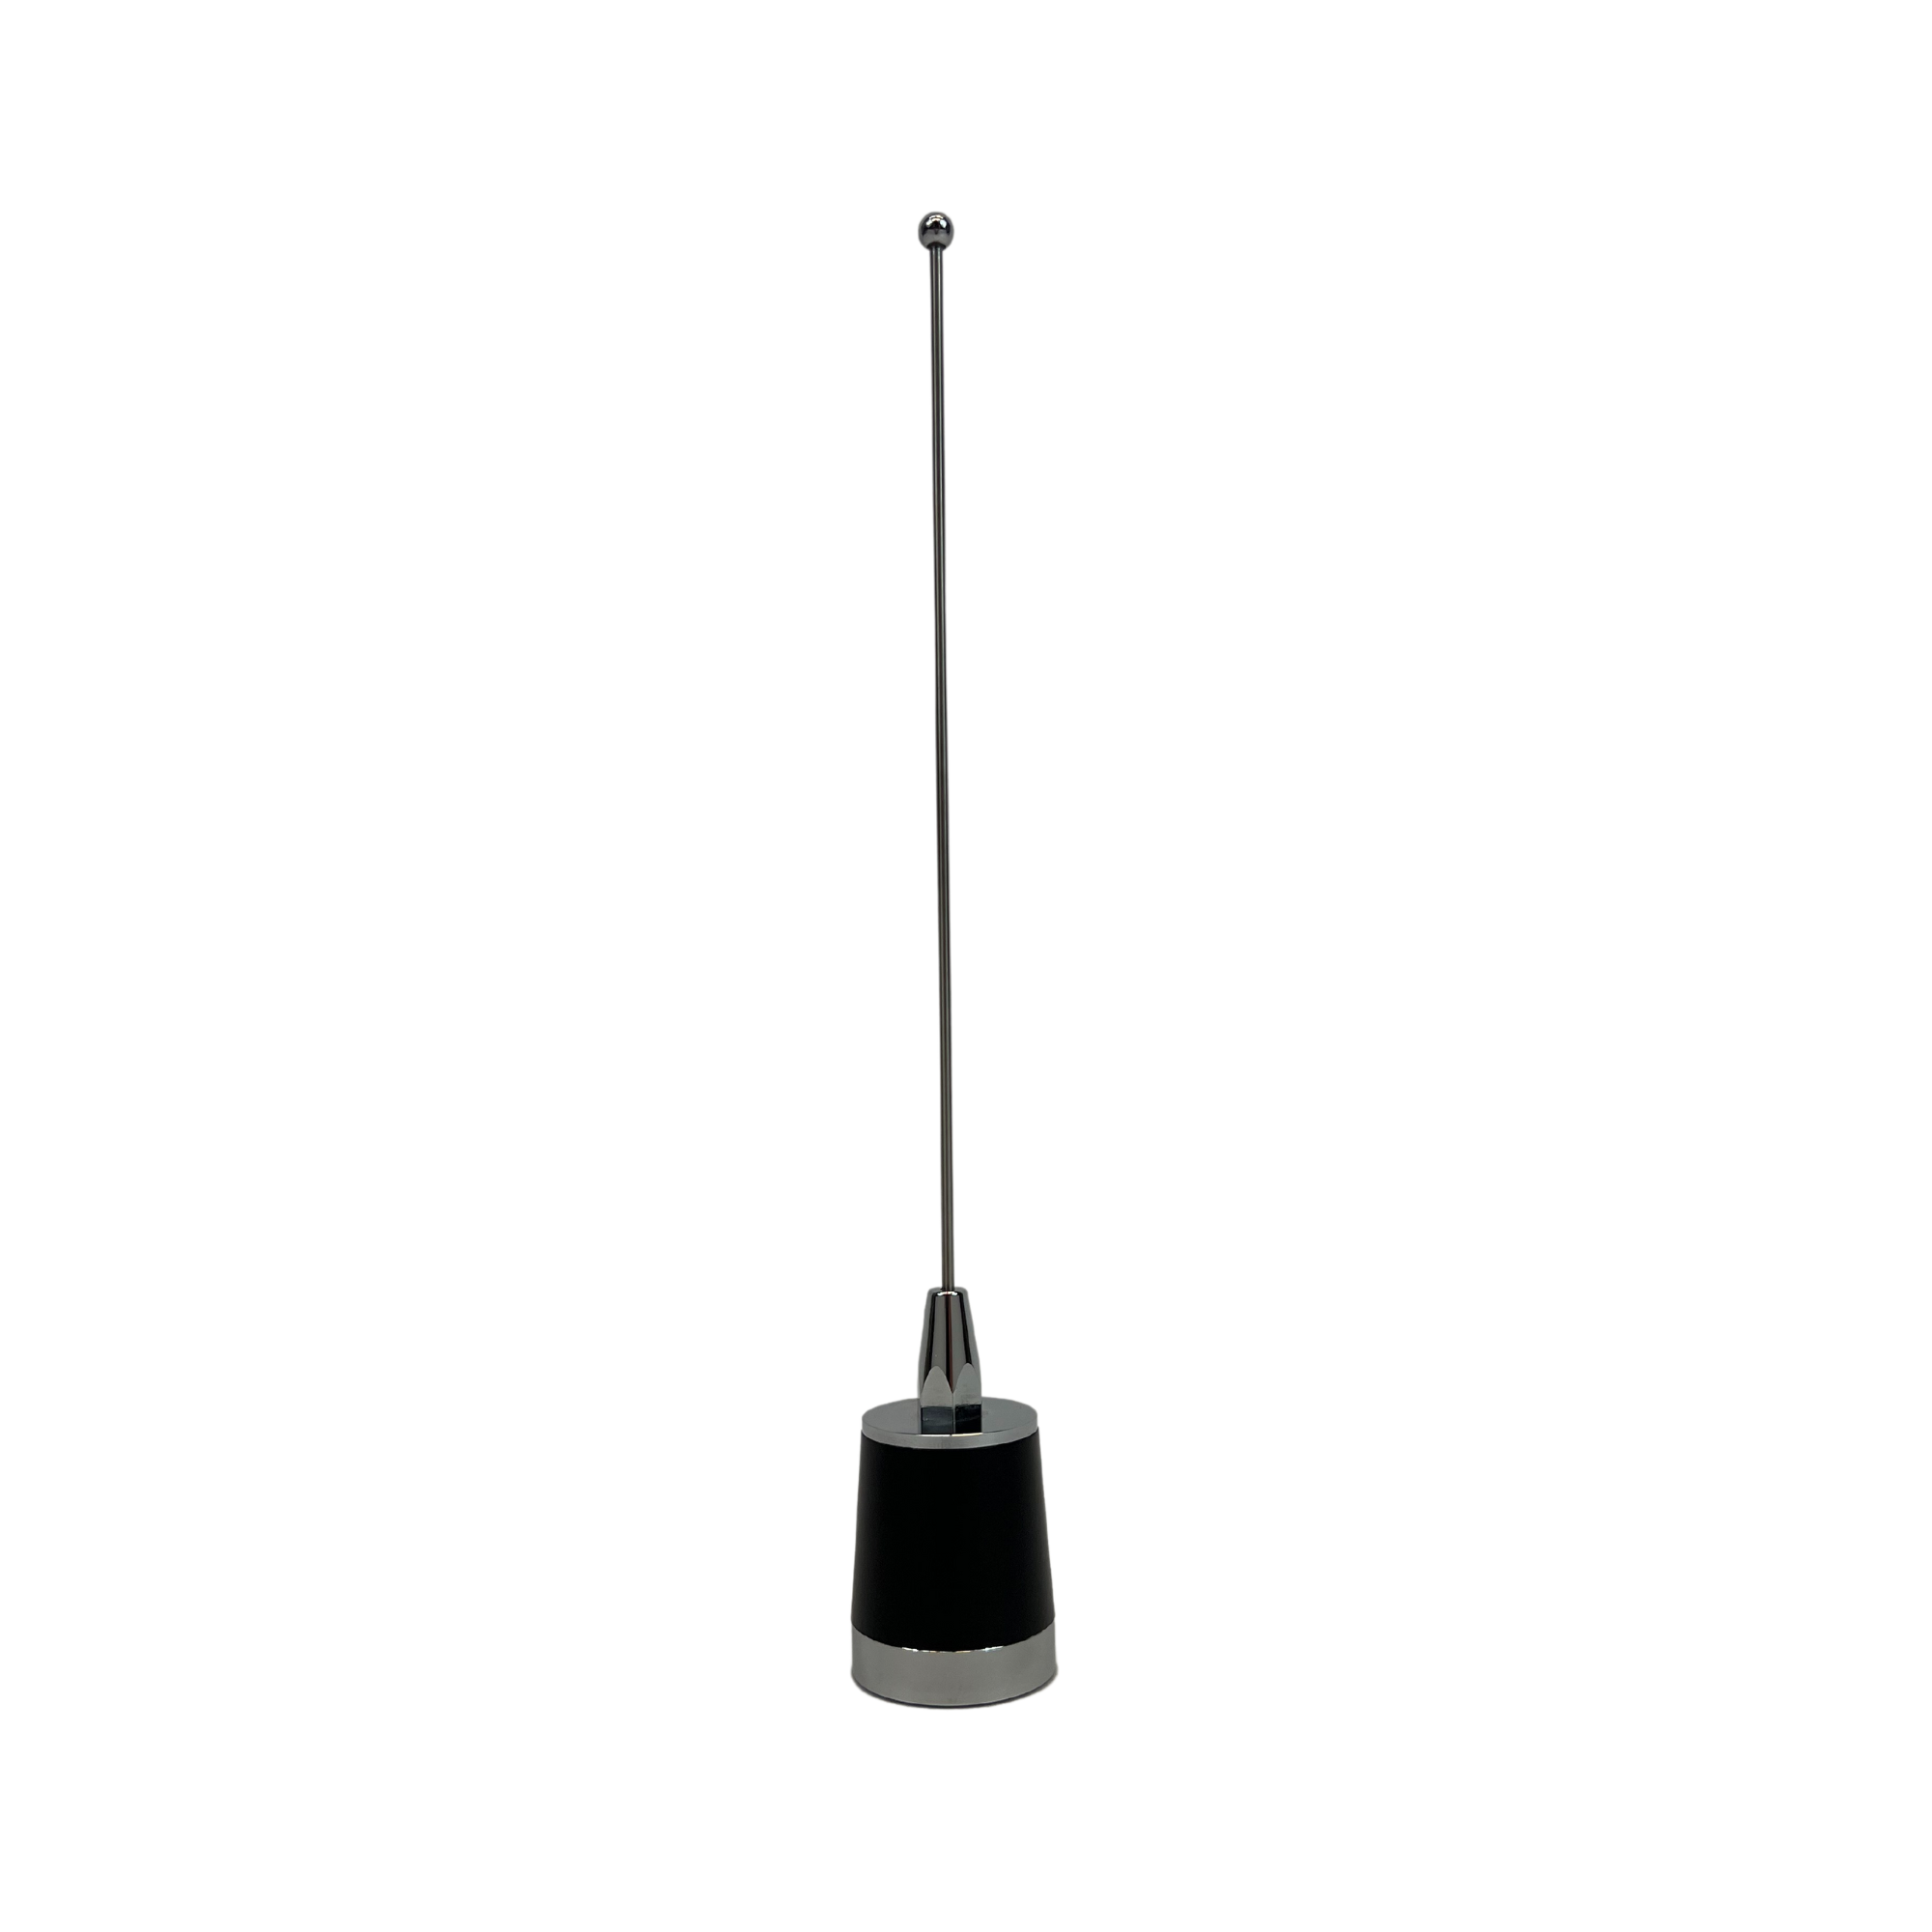 Rokland Wave Antenna 896-970MHz 3.5 dBi Gain 220mm (8.6 inch) Straight Whip